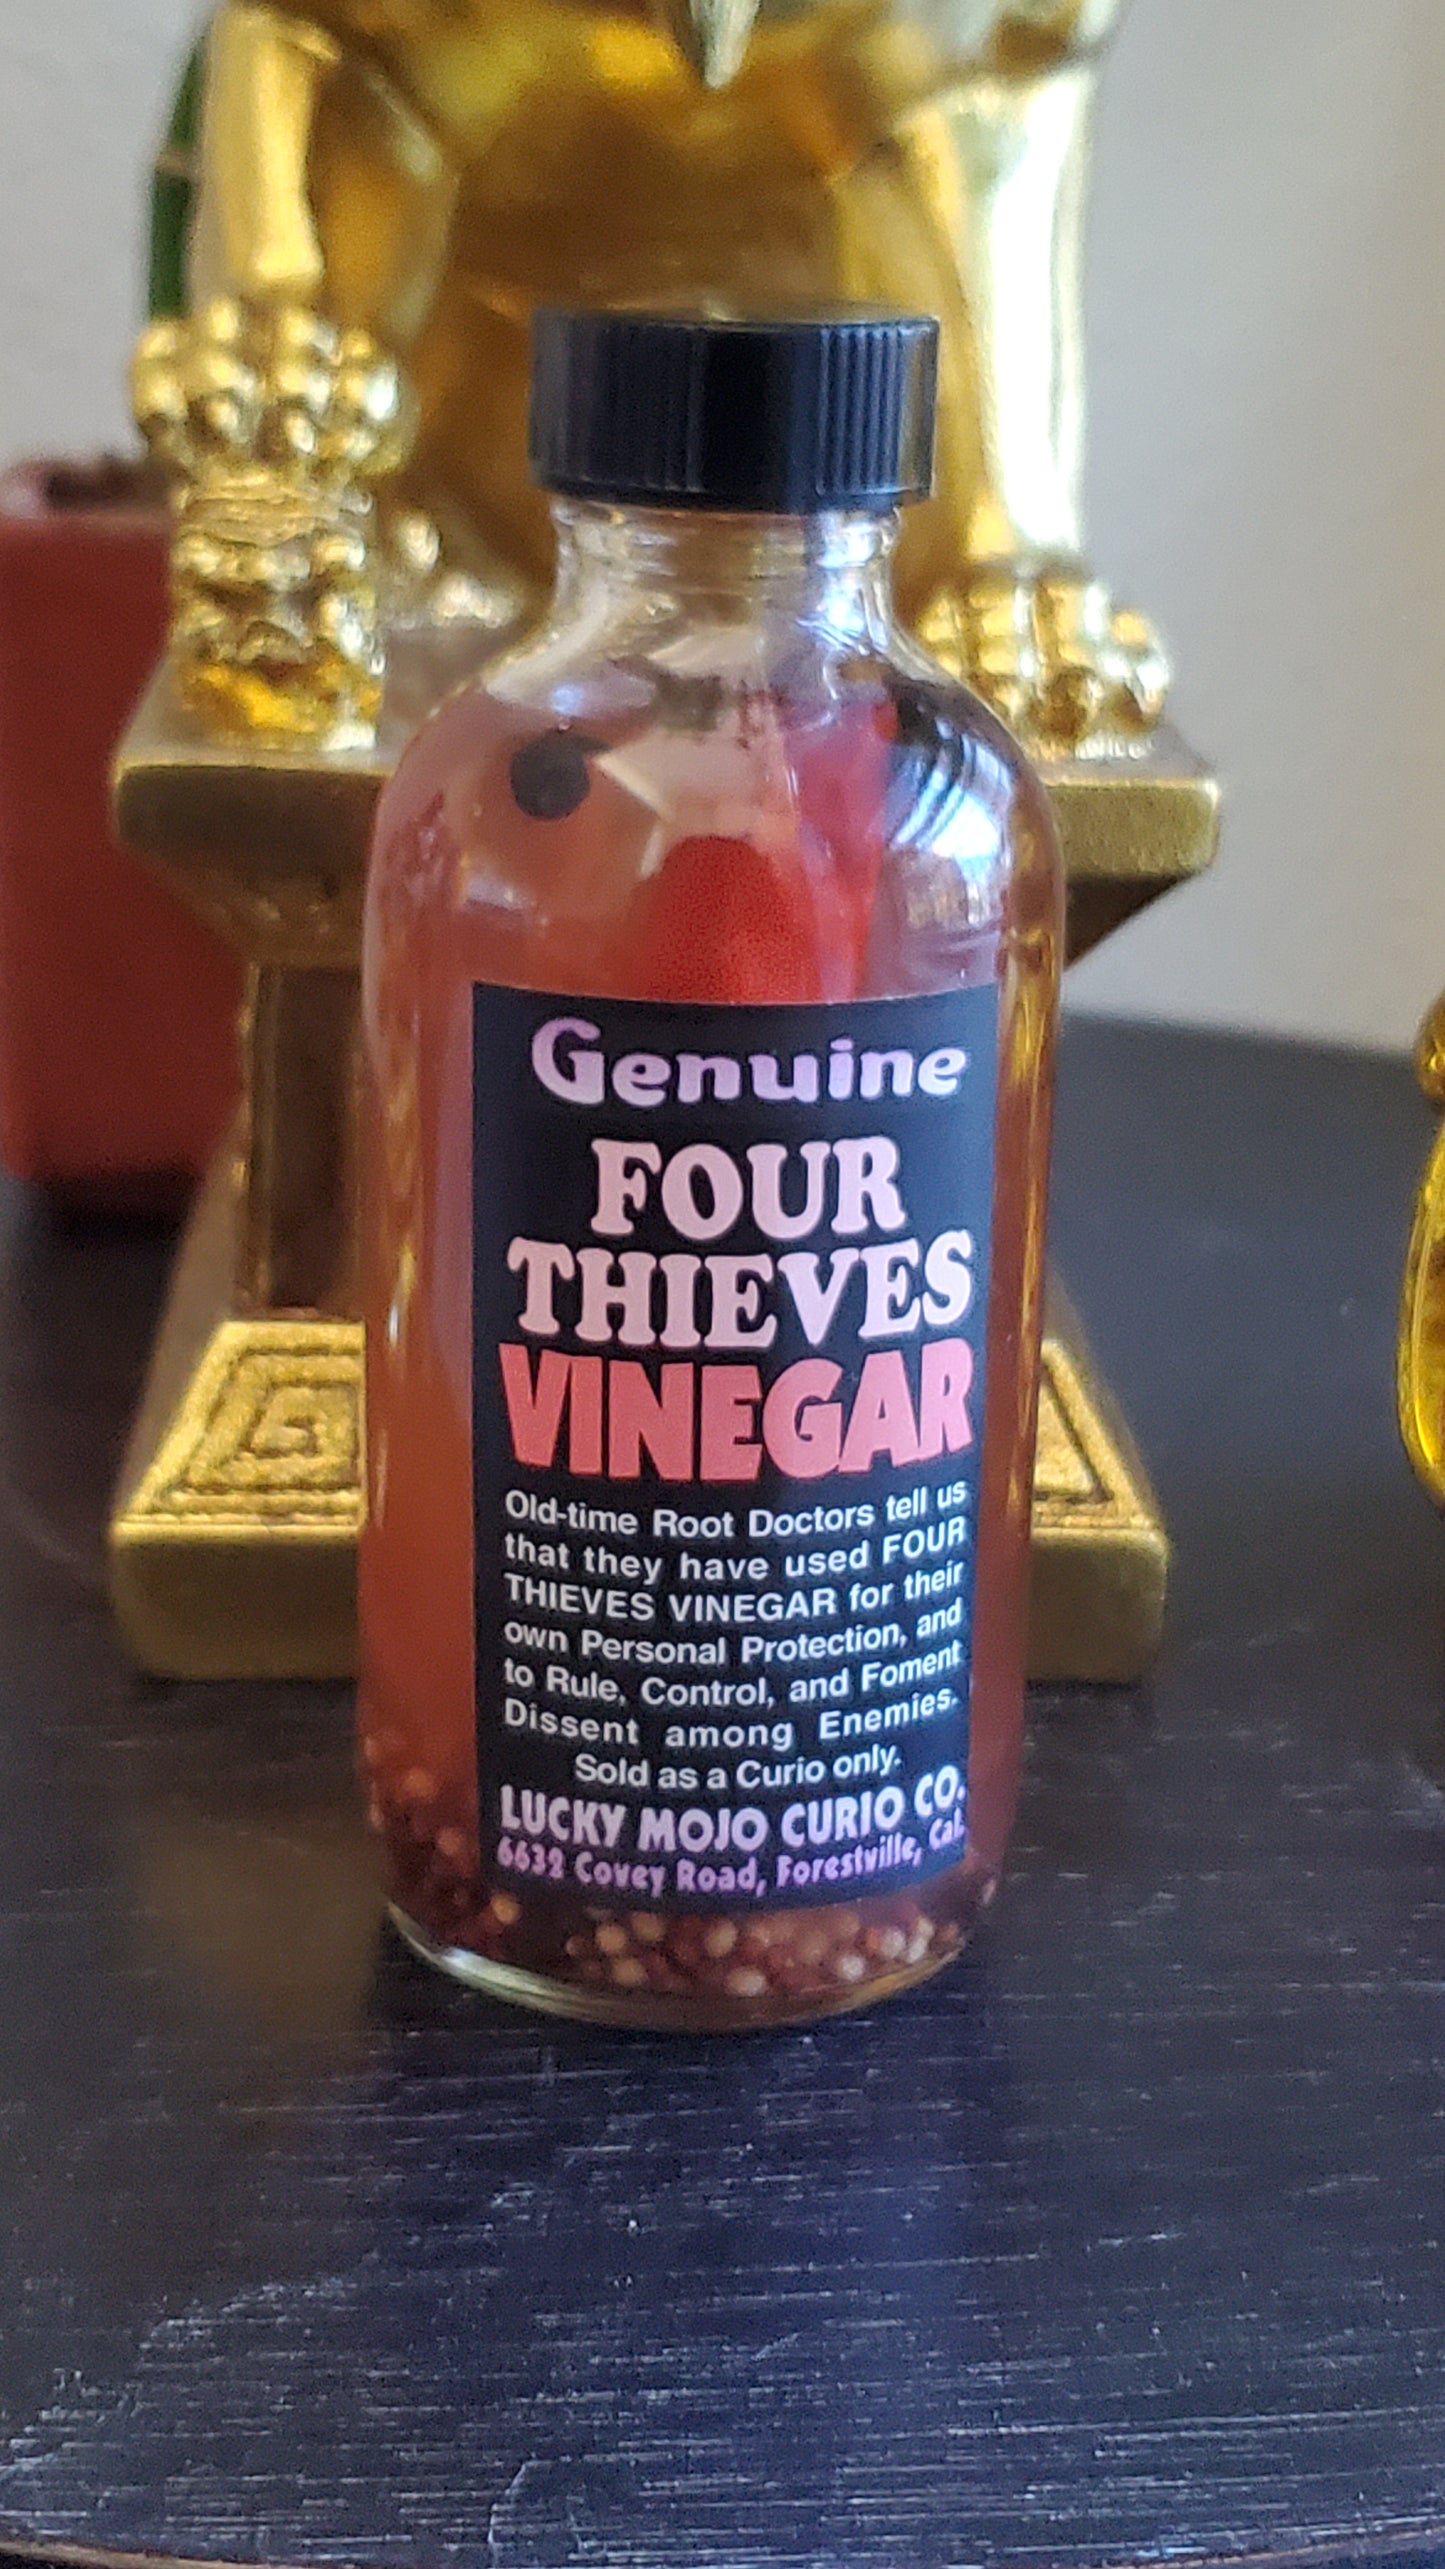 LuckyMojoCurioCo "Four Thieves Vinegar" Anointing / Conjure Oil #Great Deal #LuckyMojoCurioCo #LuckyMojo #EffectiveOils #ProtectionOil